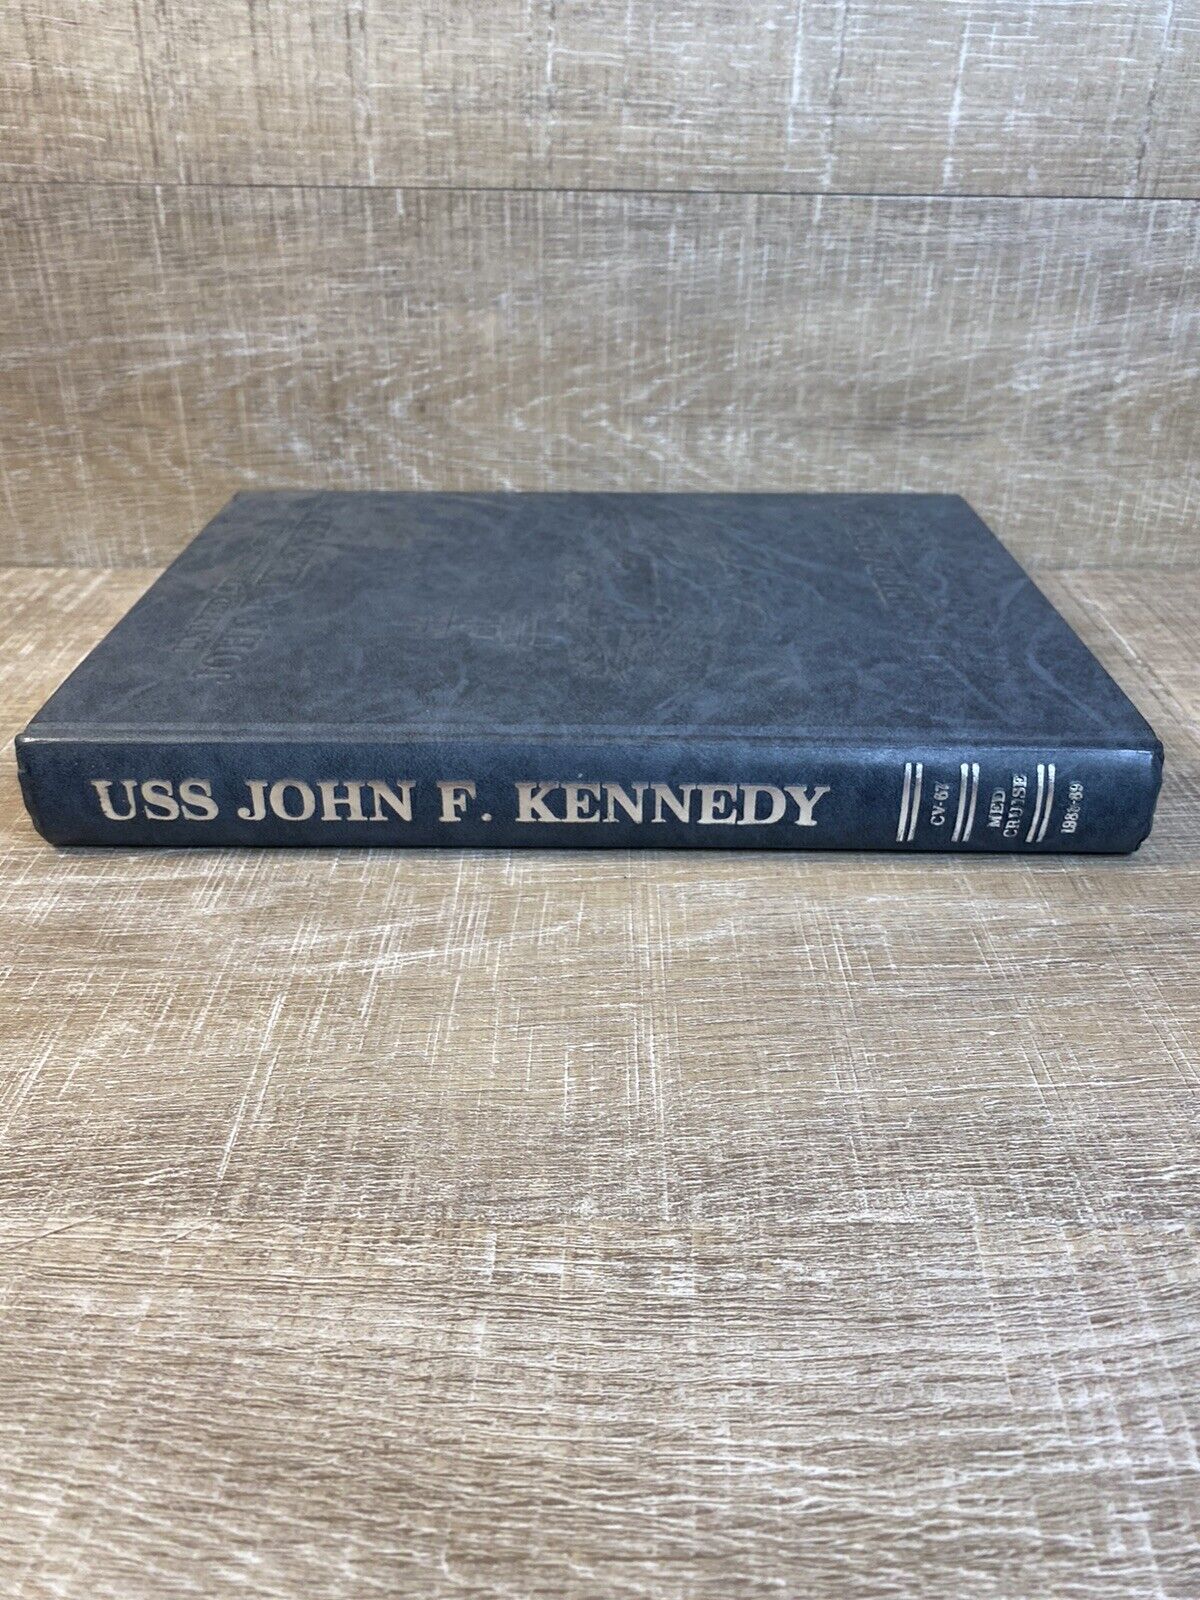 USS JOHN F. KENNEDY CV-67 MED CRUISE YEAR BOOK LOG 1988 - 1989 NAVY VTG COLD WAR